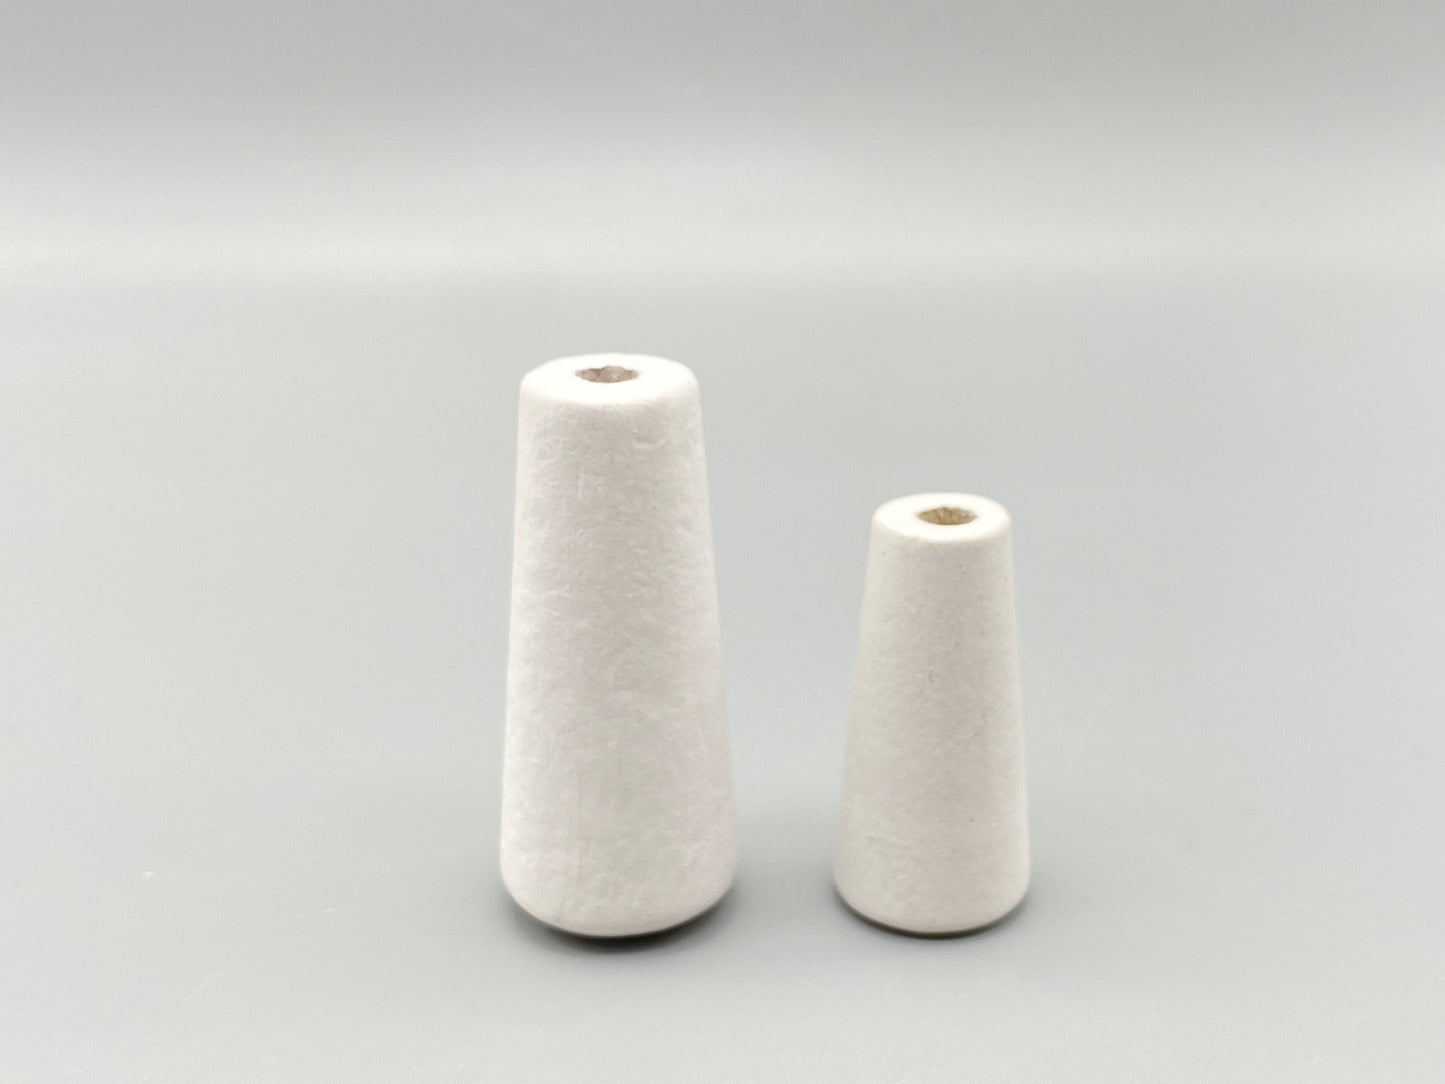 3x Slim White Wooden Blinds Acorns - Cord Pull / Light Pulls - Medium & Large Sizes - Pack of 3